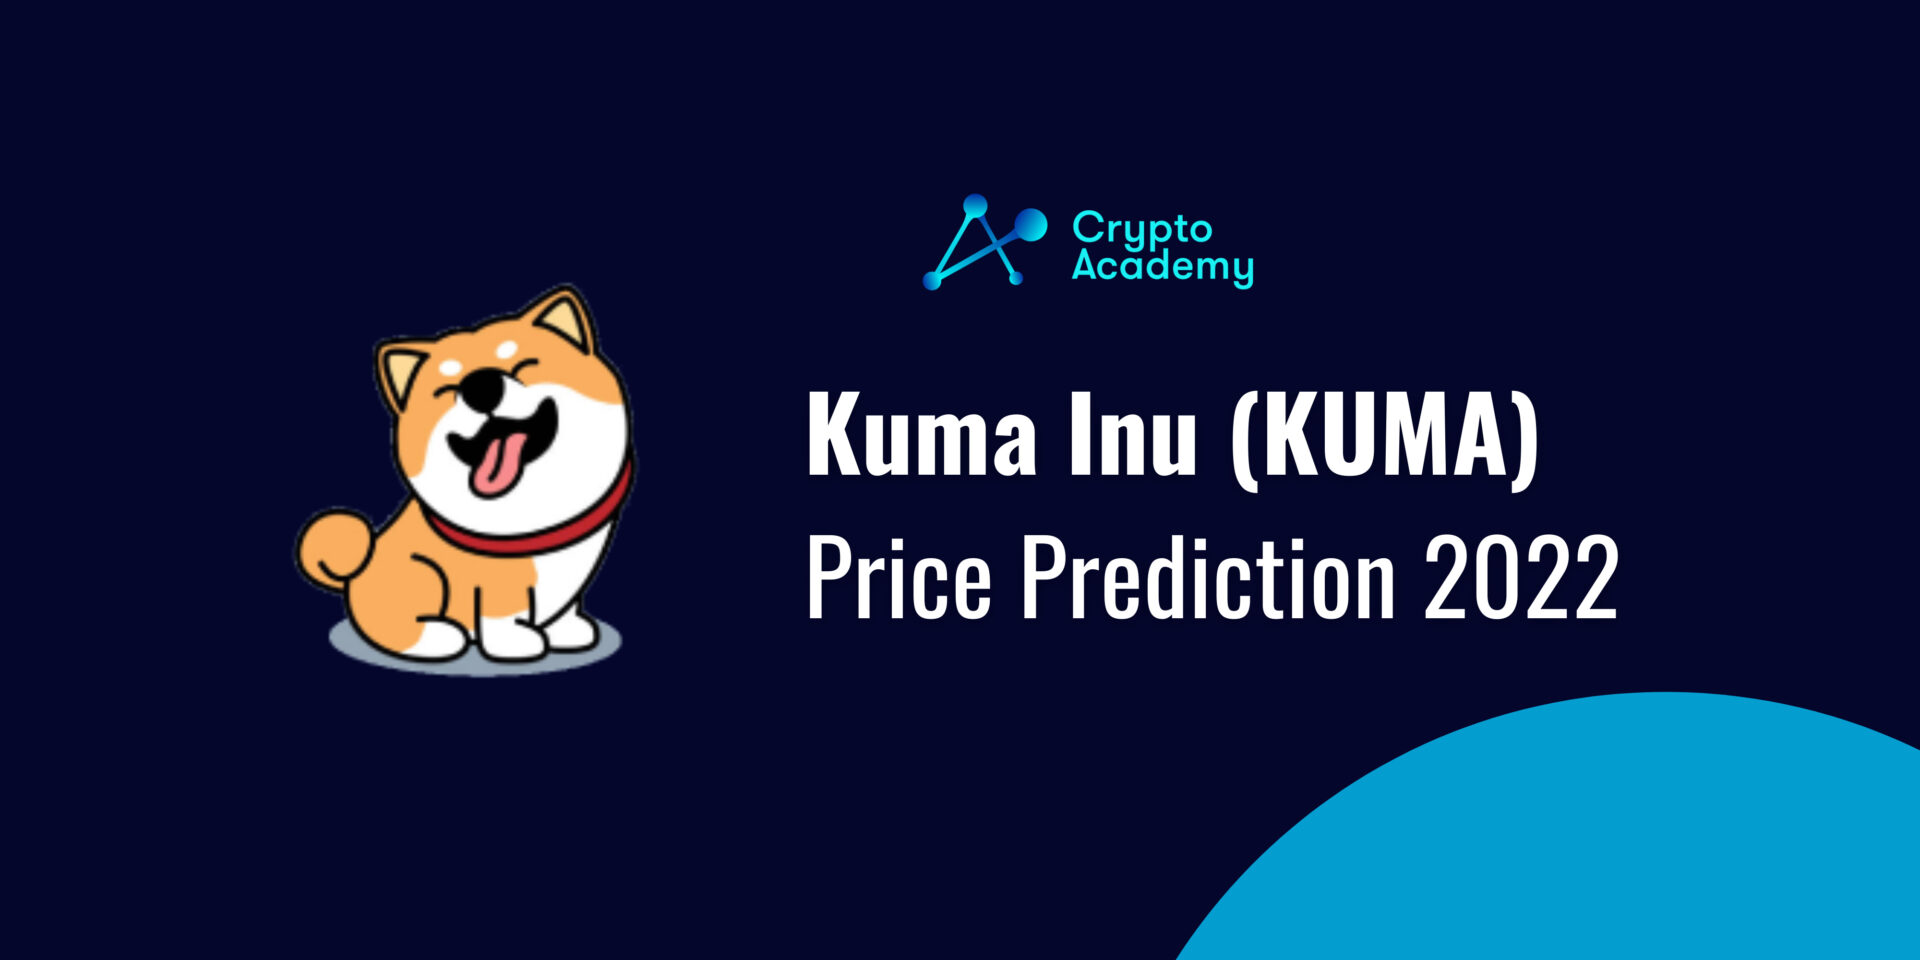 Kuma Inu Price Prediction 2022 and Beyond – Can KUMA Potentially Reach $1?